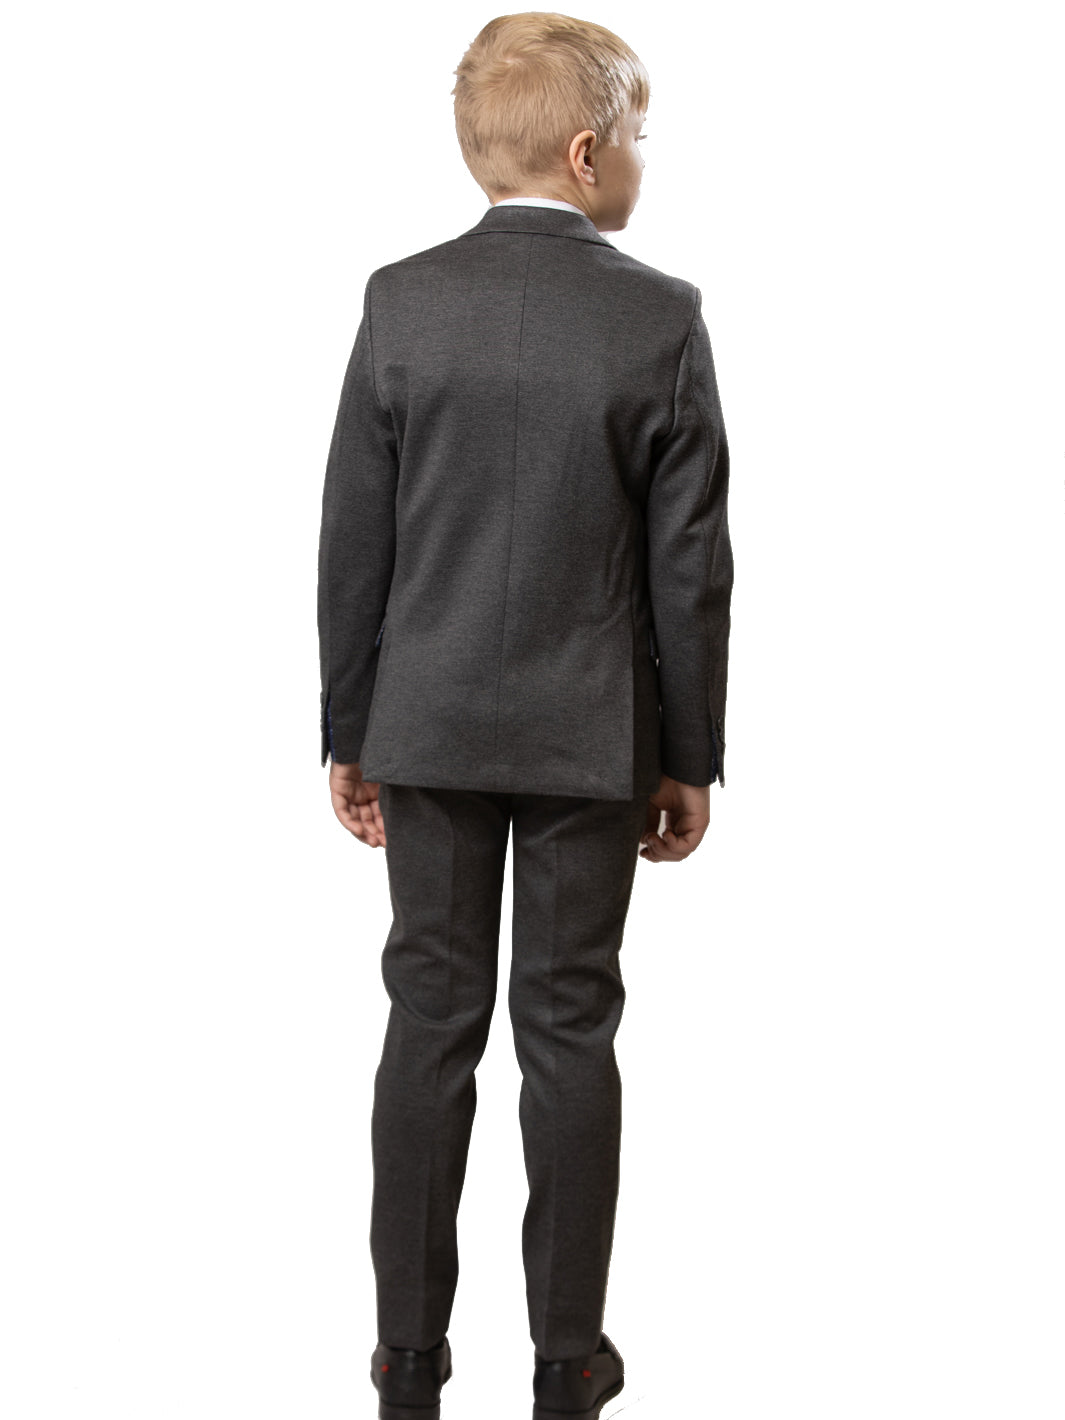 Boy's Soho Stretch Suit - Charcoal